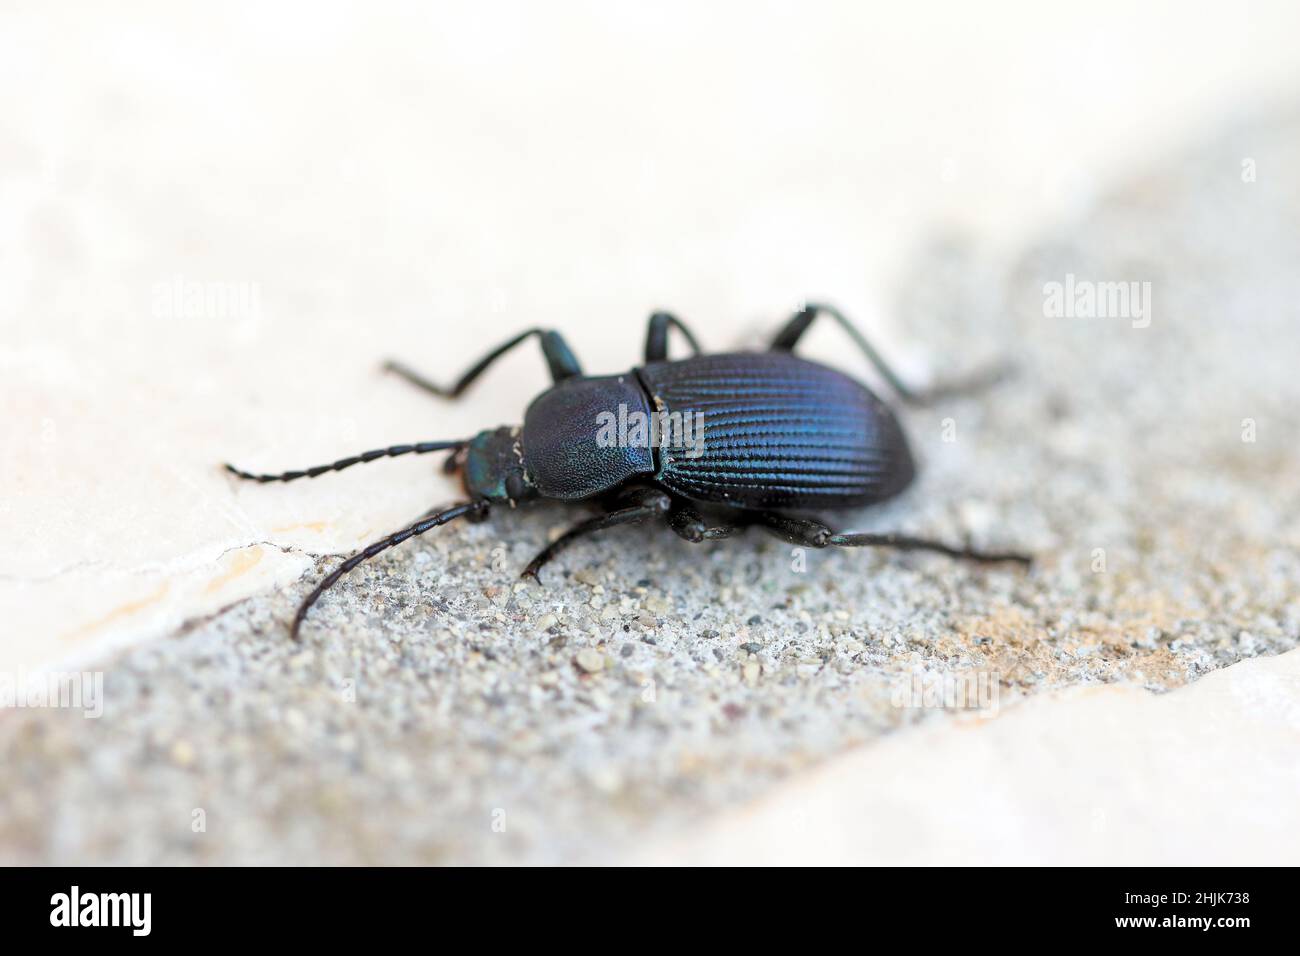 Beetle Coleoptera; Tenebrionidae; Helops sp from Croatia on stone. Stock Photo